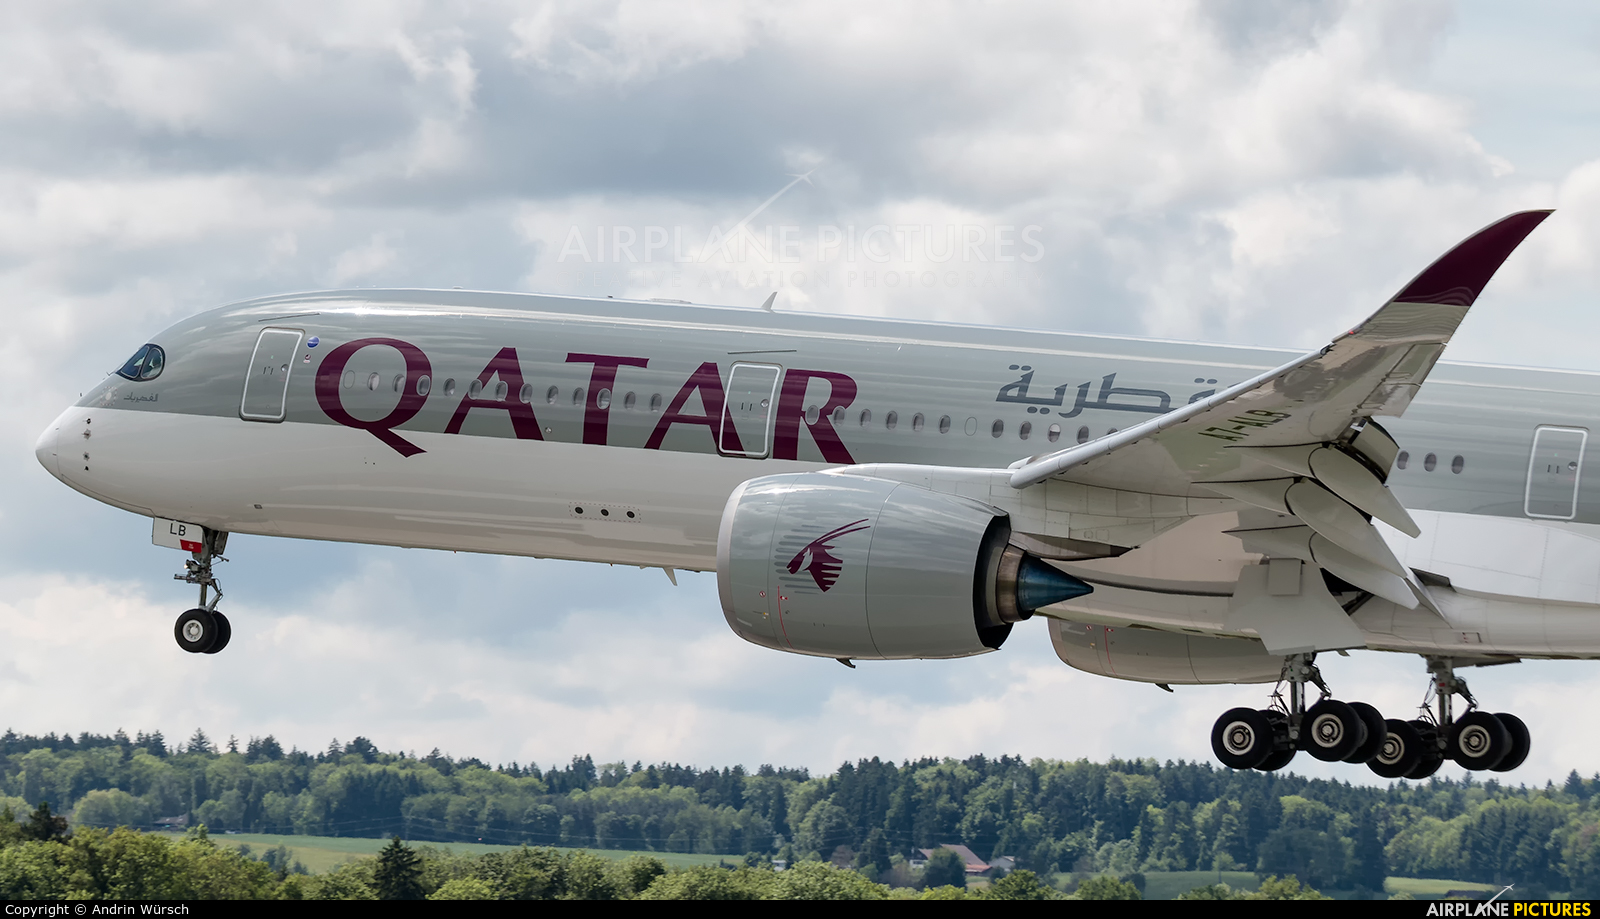 Qatar Airways A7-ALB aircraft at Zurich